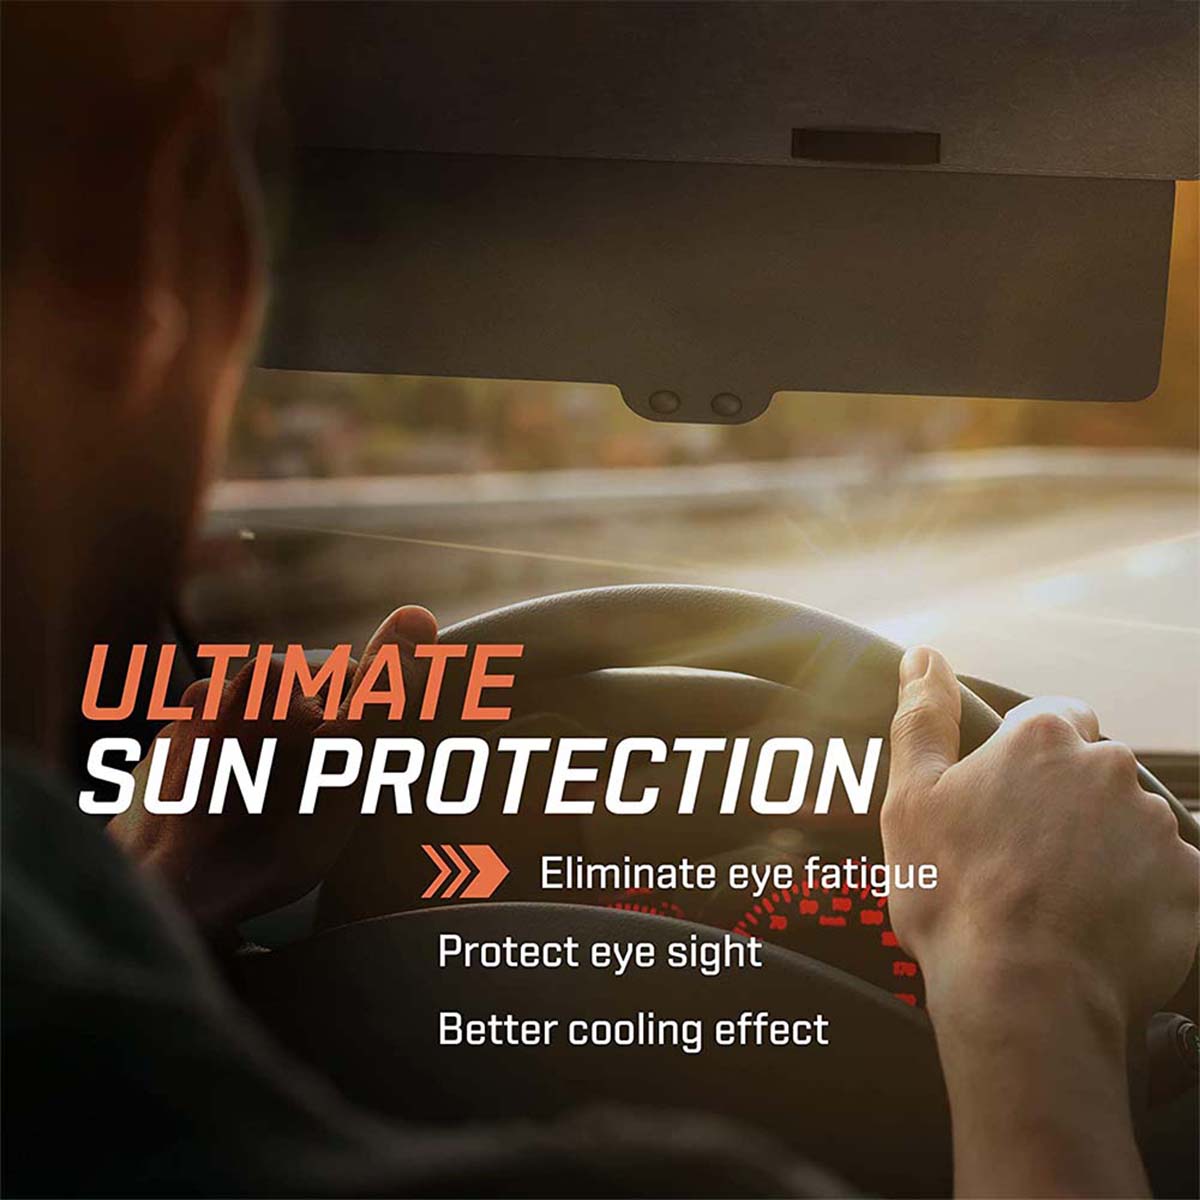 Polarized Sun Visor Sunshade Extender for Car with Polycarbonate Lens, Custom For Your Cars, Anti-Glare Car Sun Visor Protects from Sun Glare, Snow Blindness, UV Rays, Universal for Cars, SUVs LM13999